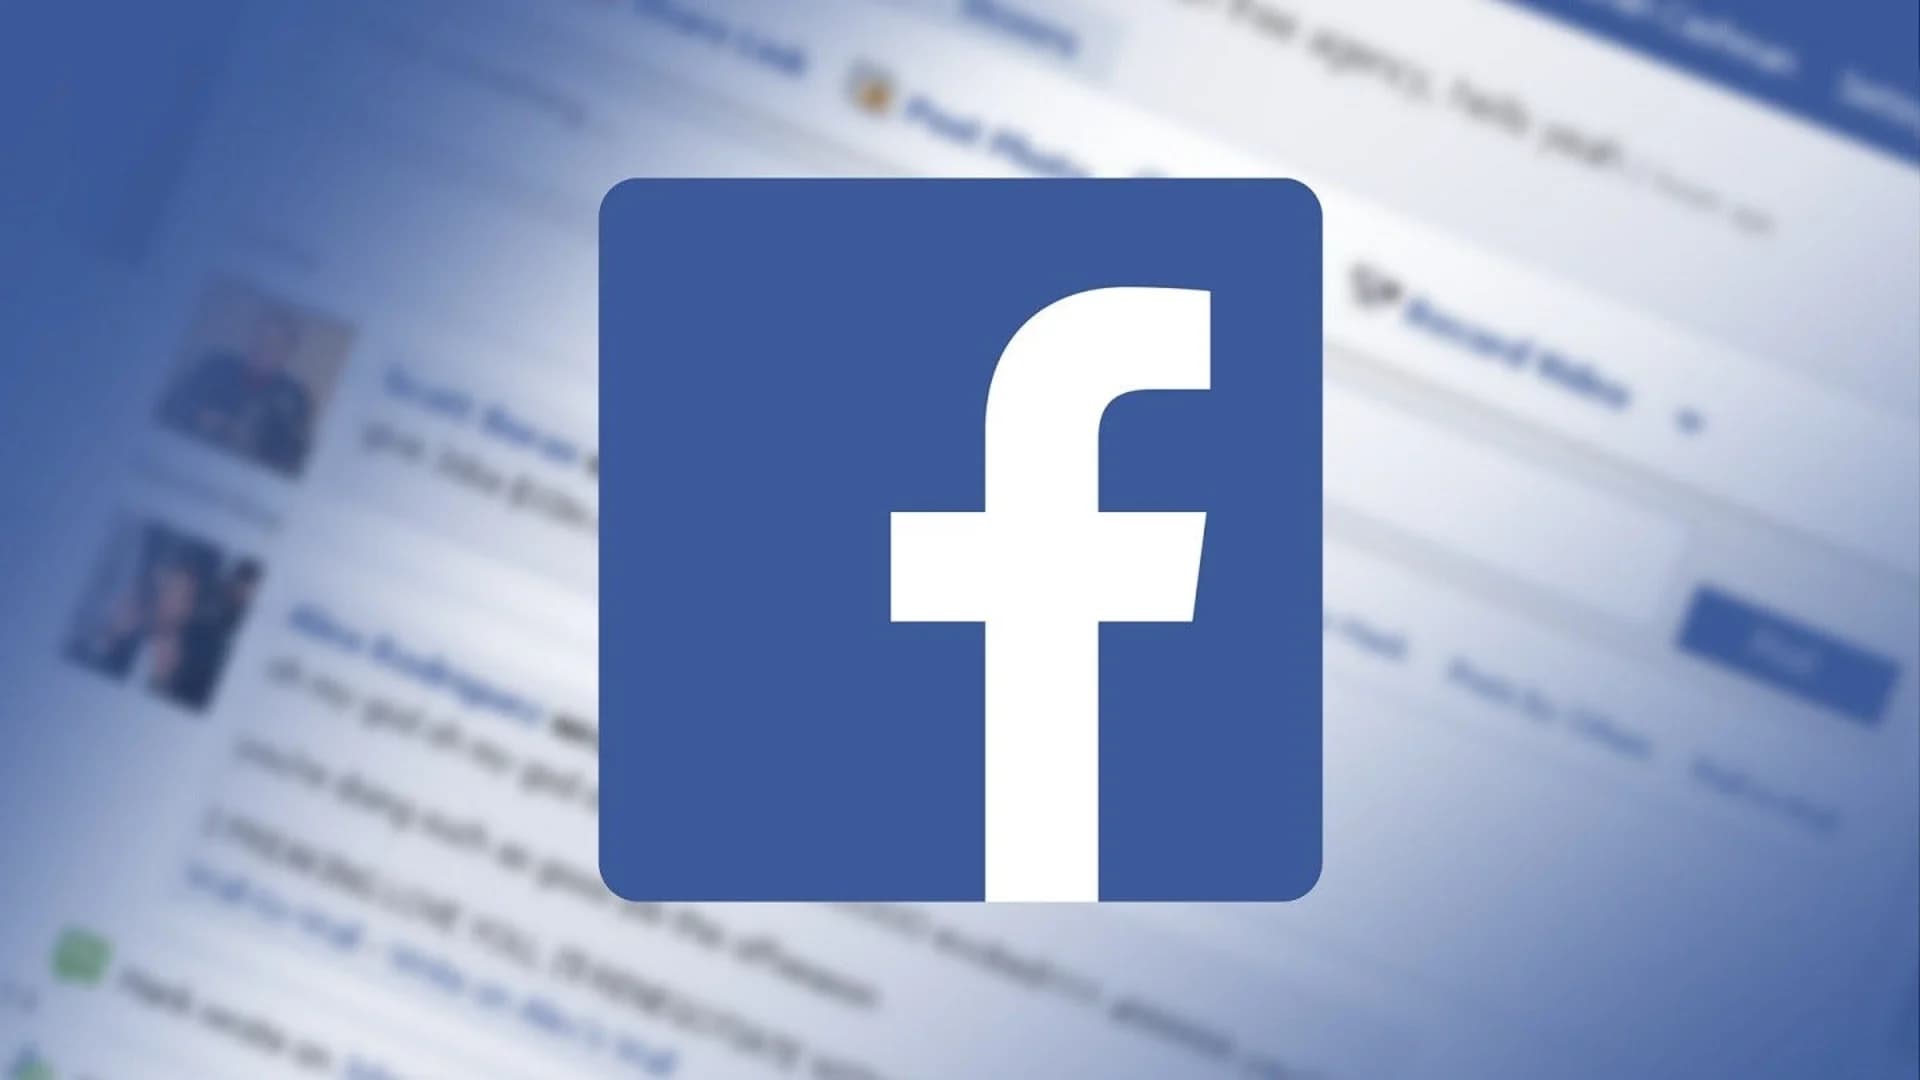 New Jersey investigating Facebook, Cambridge Analytica